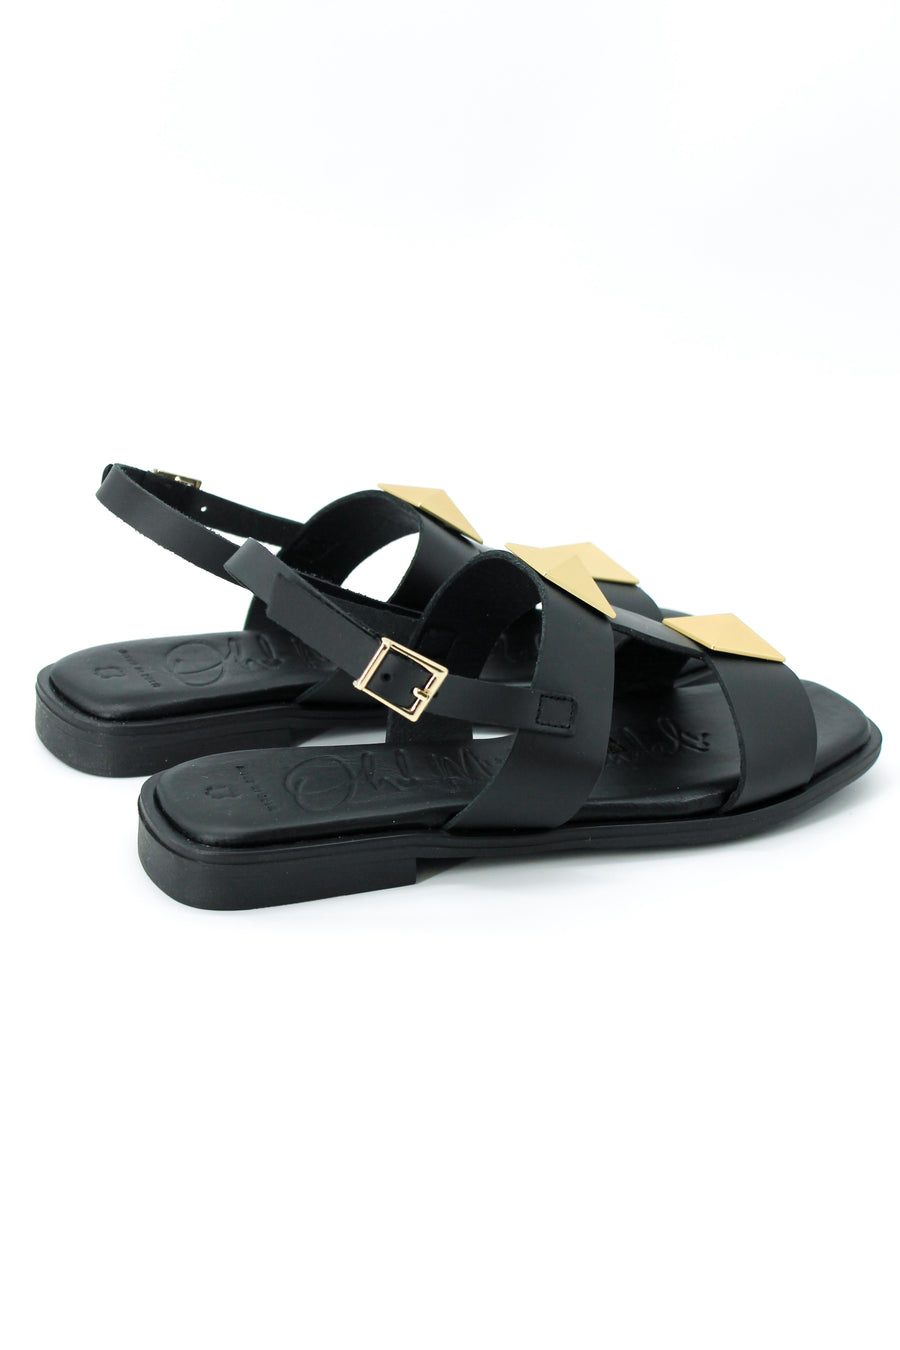 Oh My Sandals 5159 Black